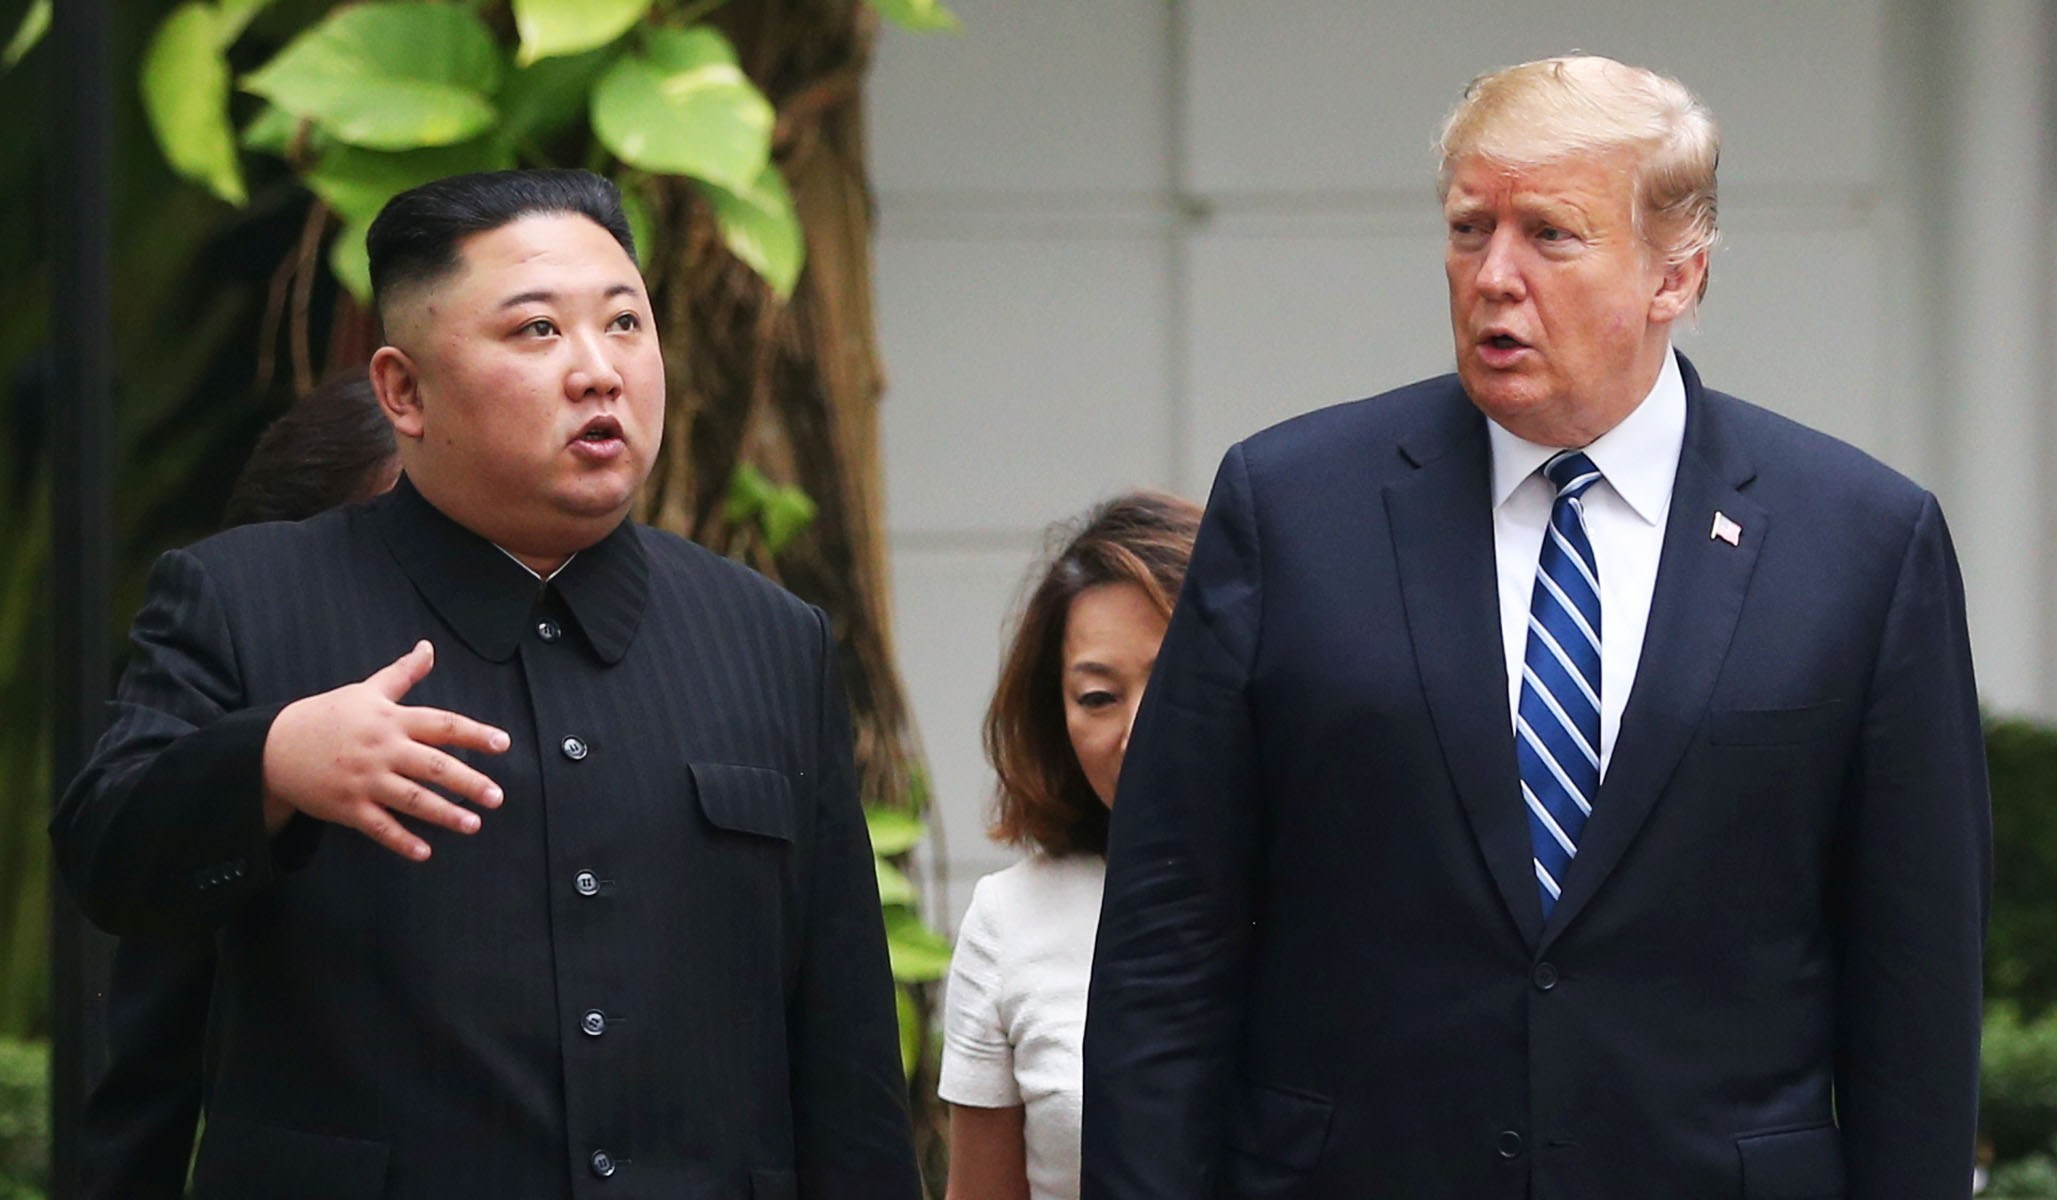 North Korea's leader Kim Jong Un and U.S. President Donald Trump talk in the garden of the Metropole hotel during the second North Korea-U.S. summit in Hanoi, Vietnam February 28, 2019. REUTERS/Leah Millis - RC1FDD0BCA40